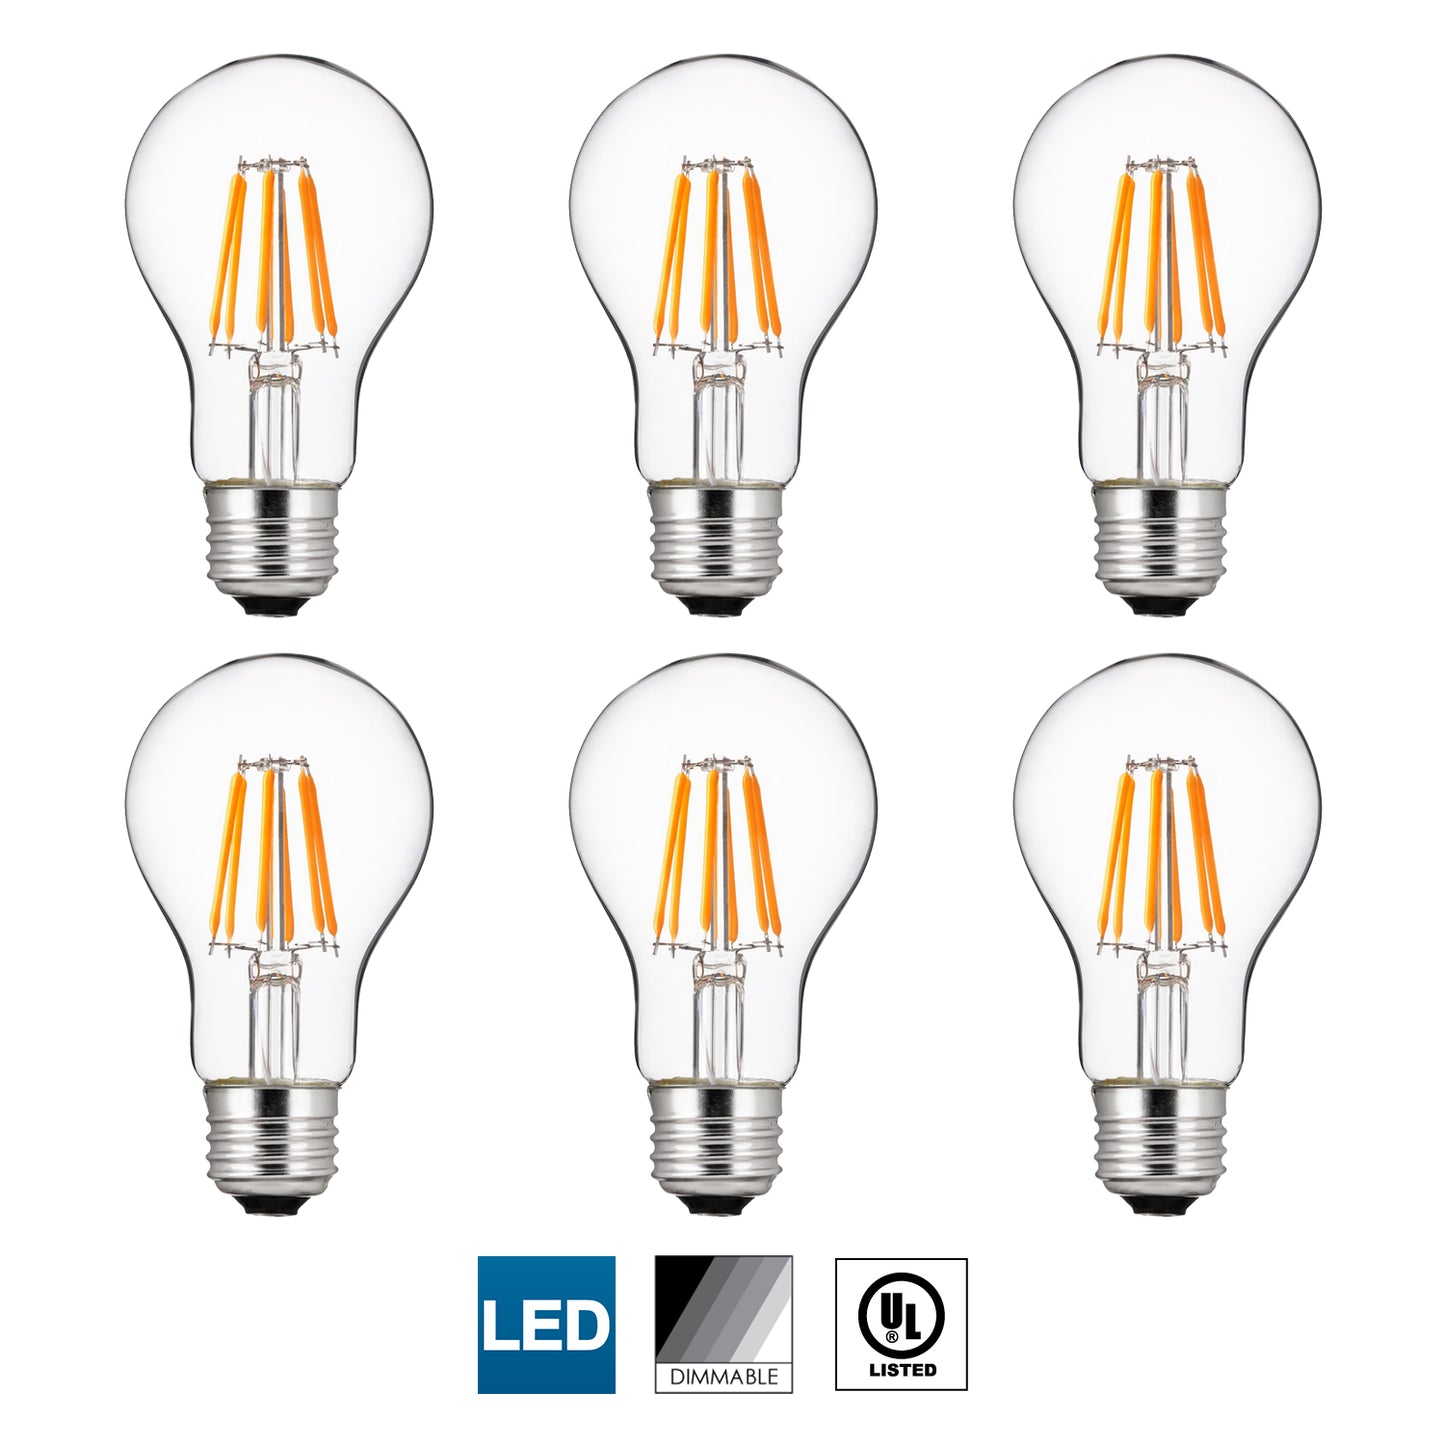 Sunlite 80188 LED Filament A19 Standard Light Bulb 6 Watts (40 Watt Equivalent) Clear Dimmable Light Bulb 2700K - Warm White 1 Pack